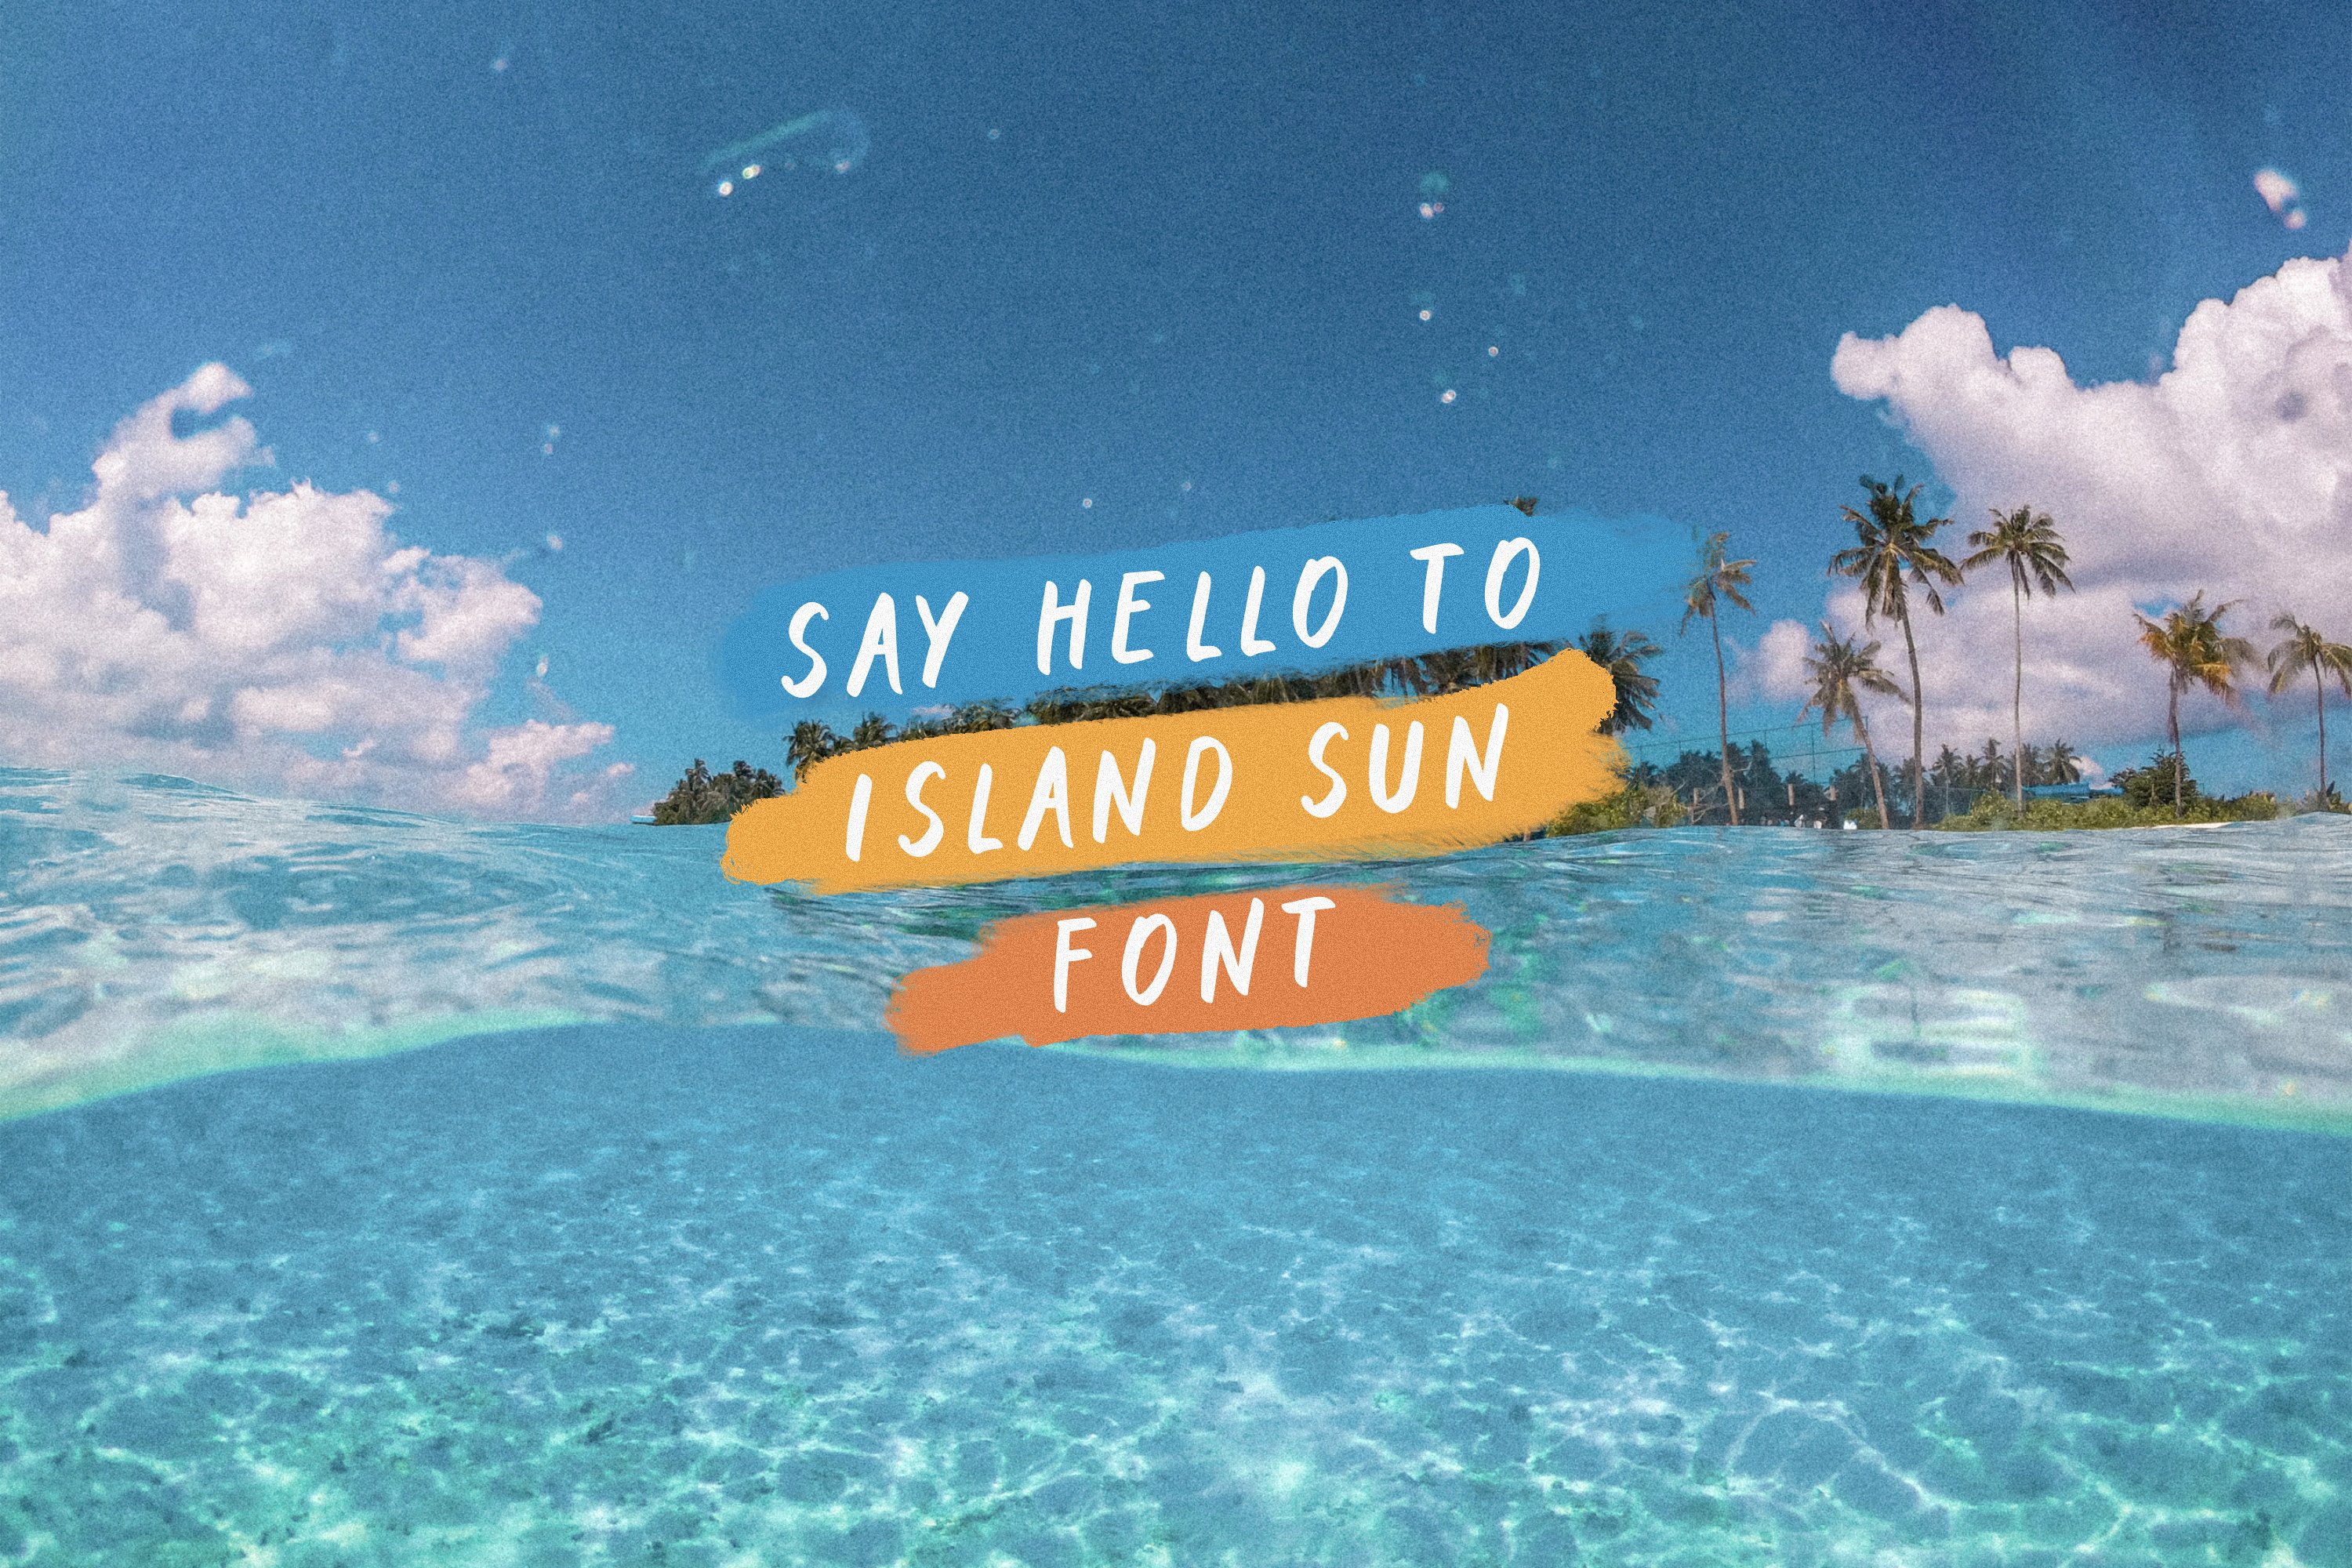 Island Sun Handwritten Marker Font cover image.